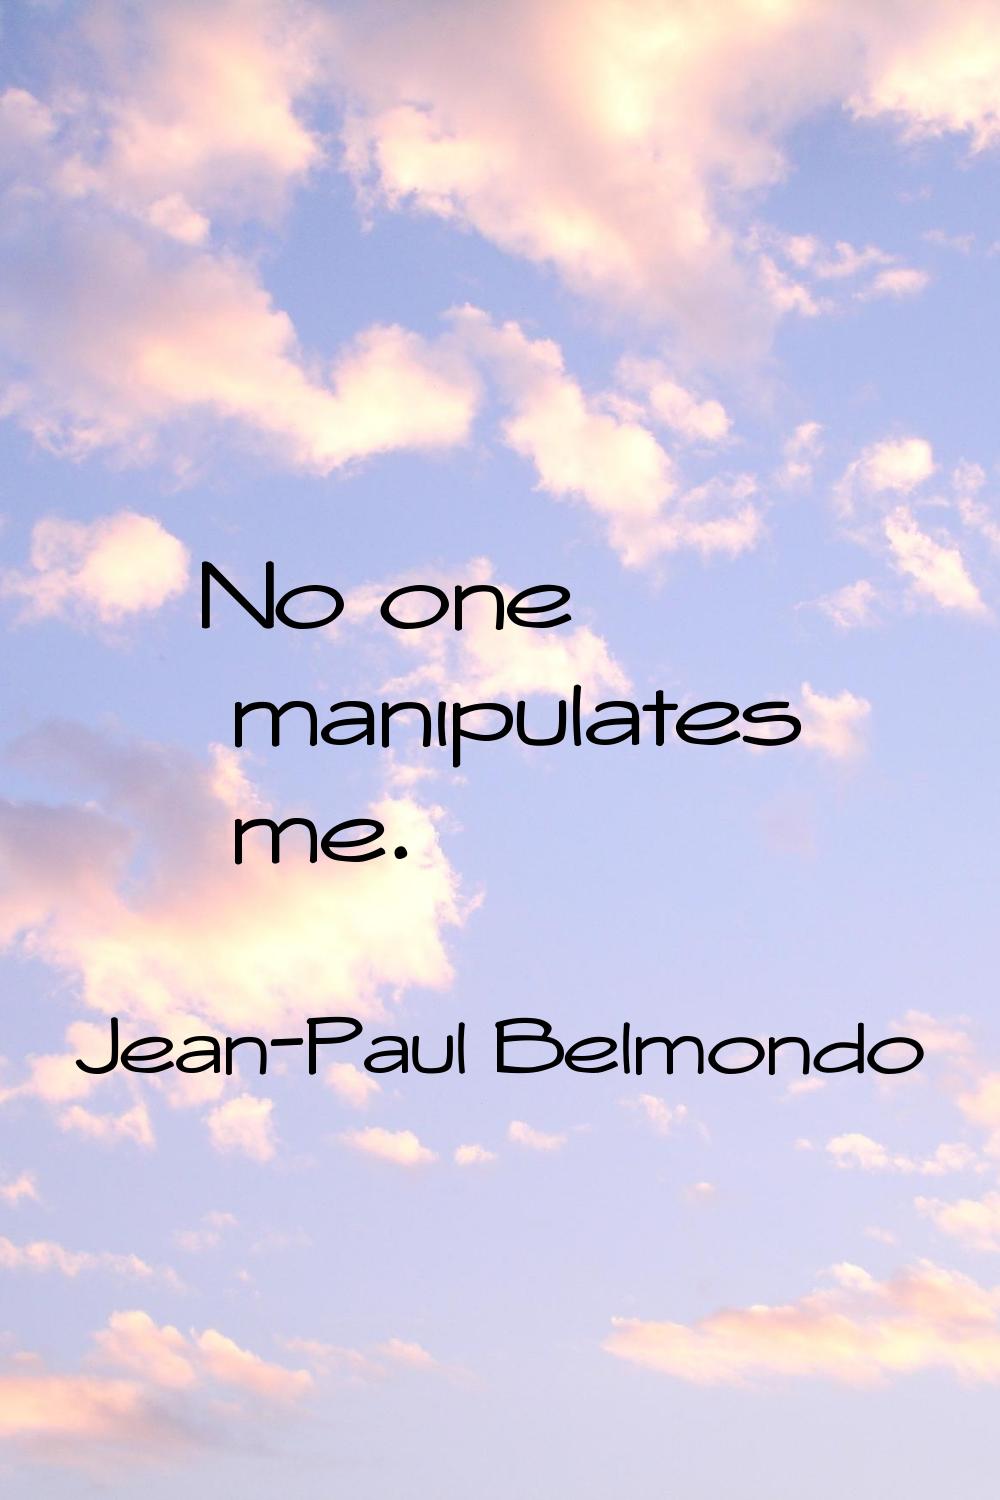 No one manipulates me.